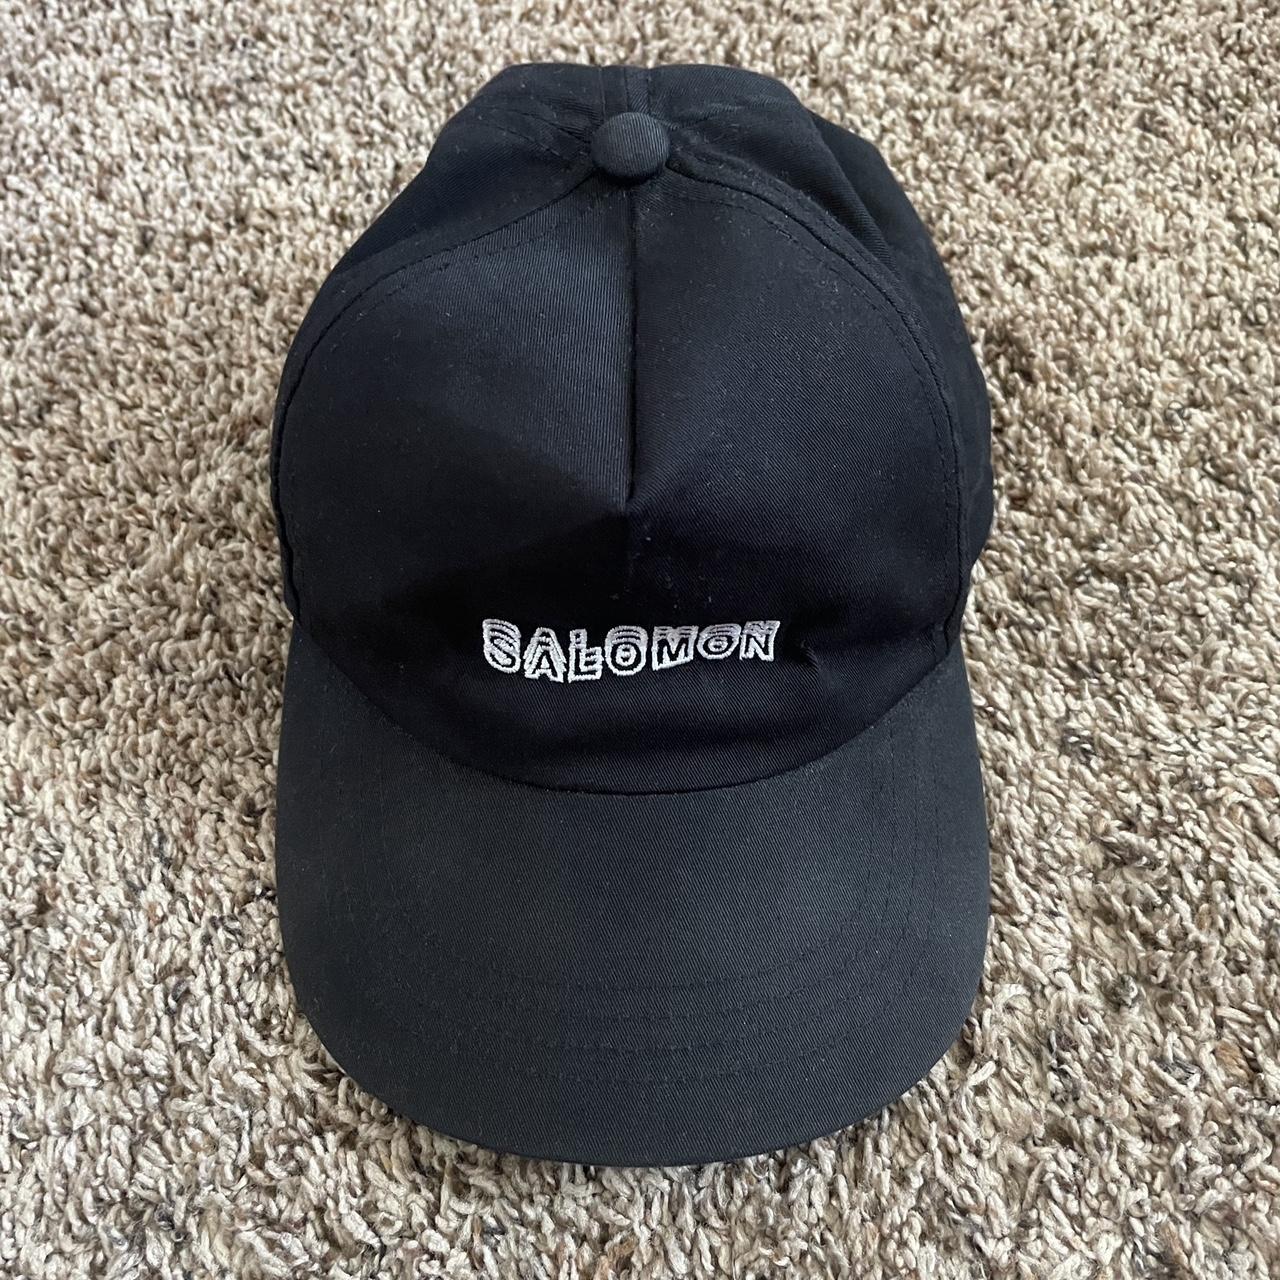 Salomon Men's Black Hat | Depop